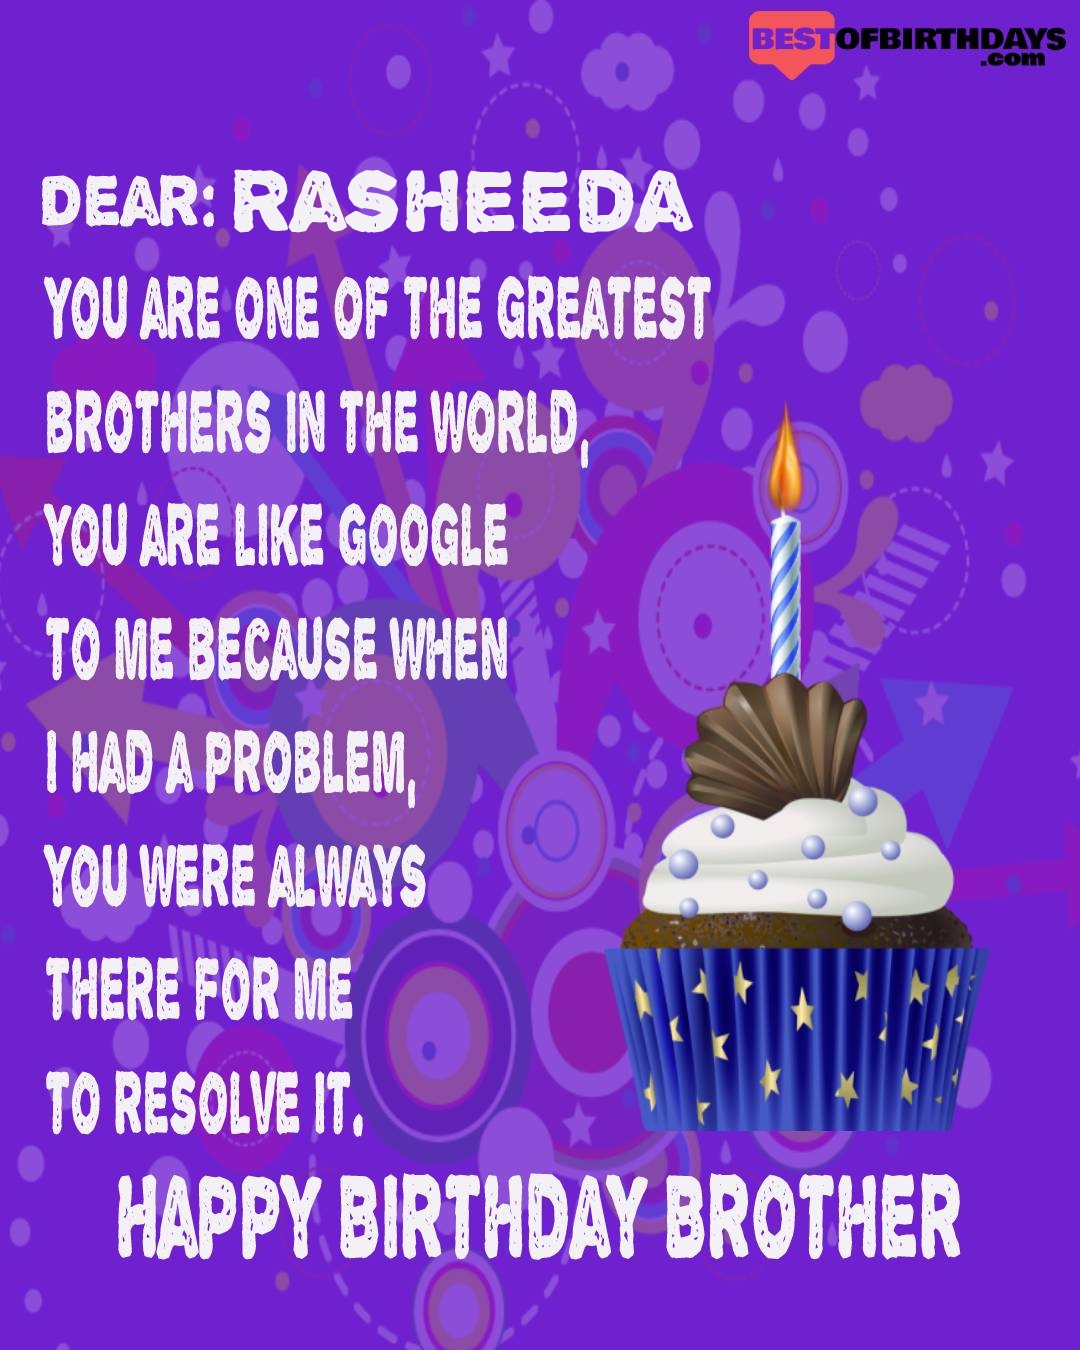 Happy birthday rasheeda bhai brother bro